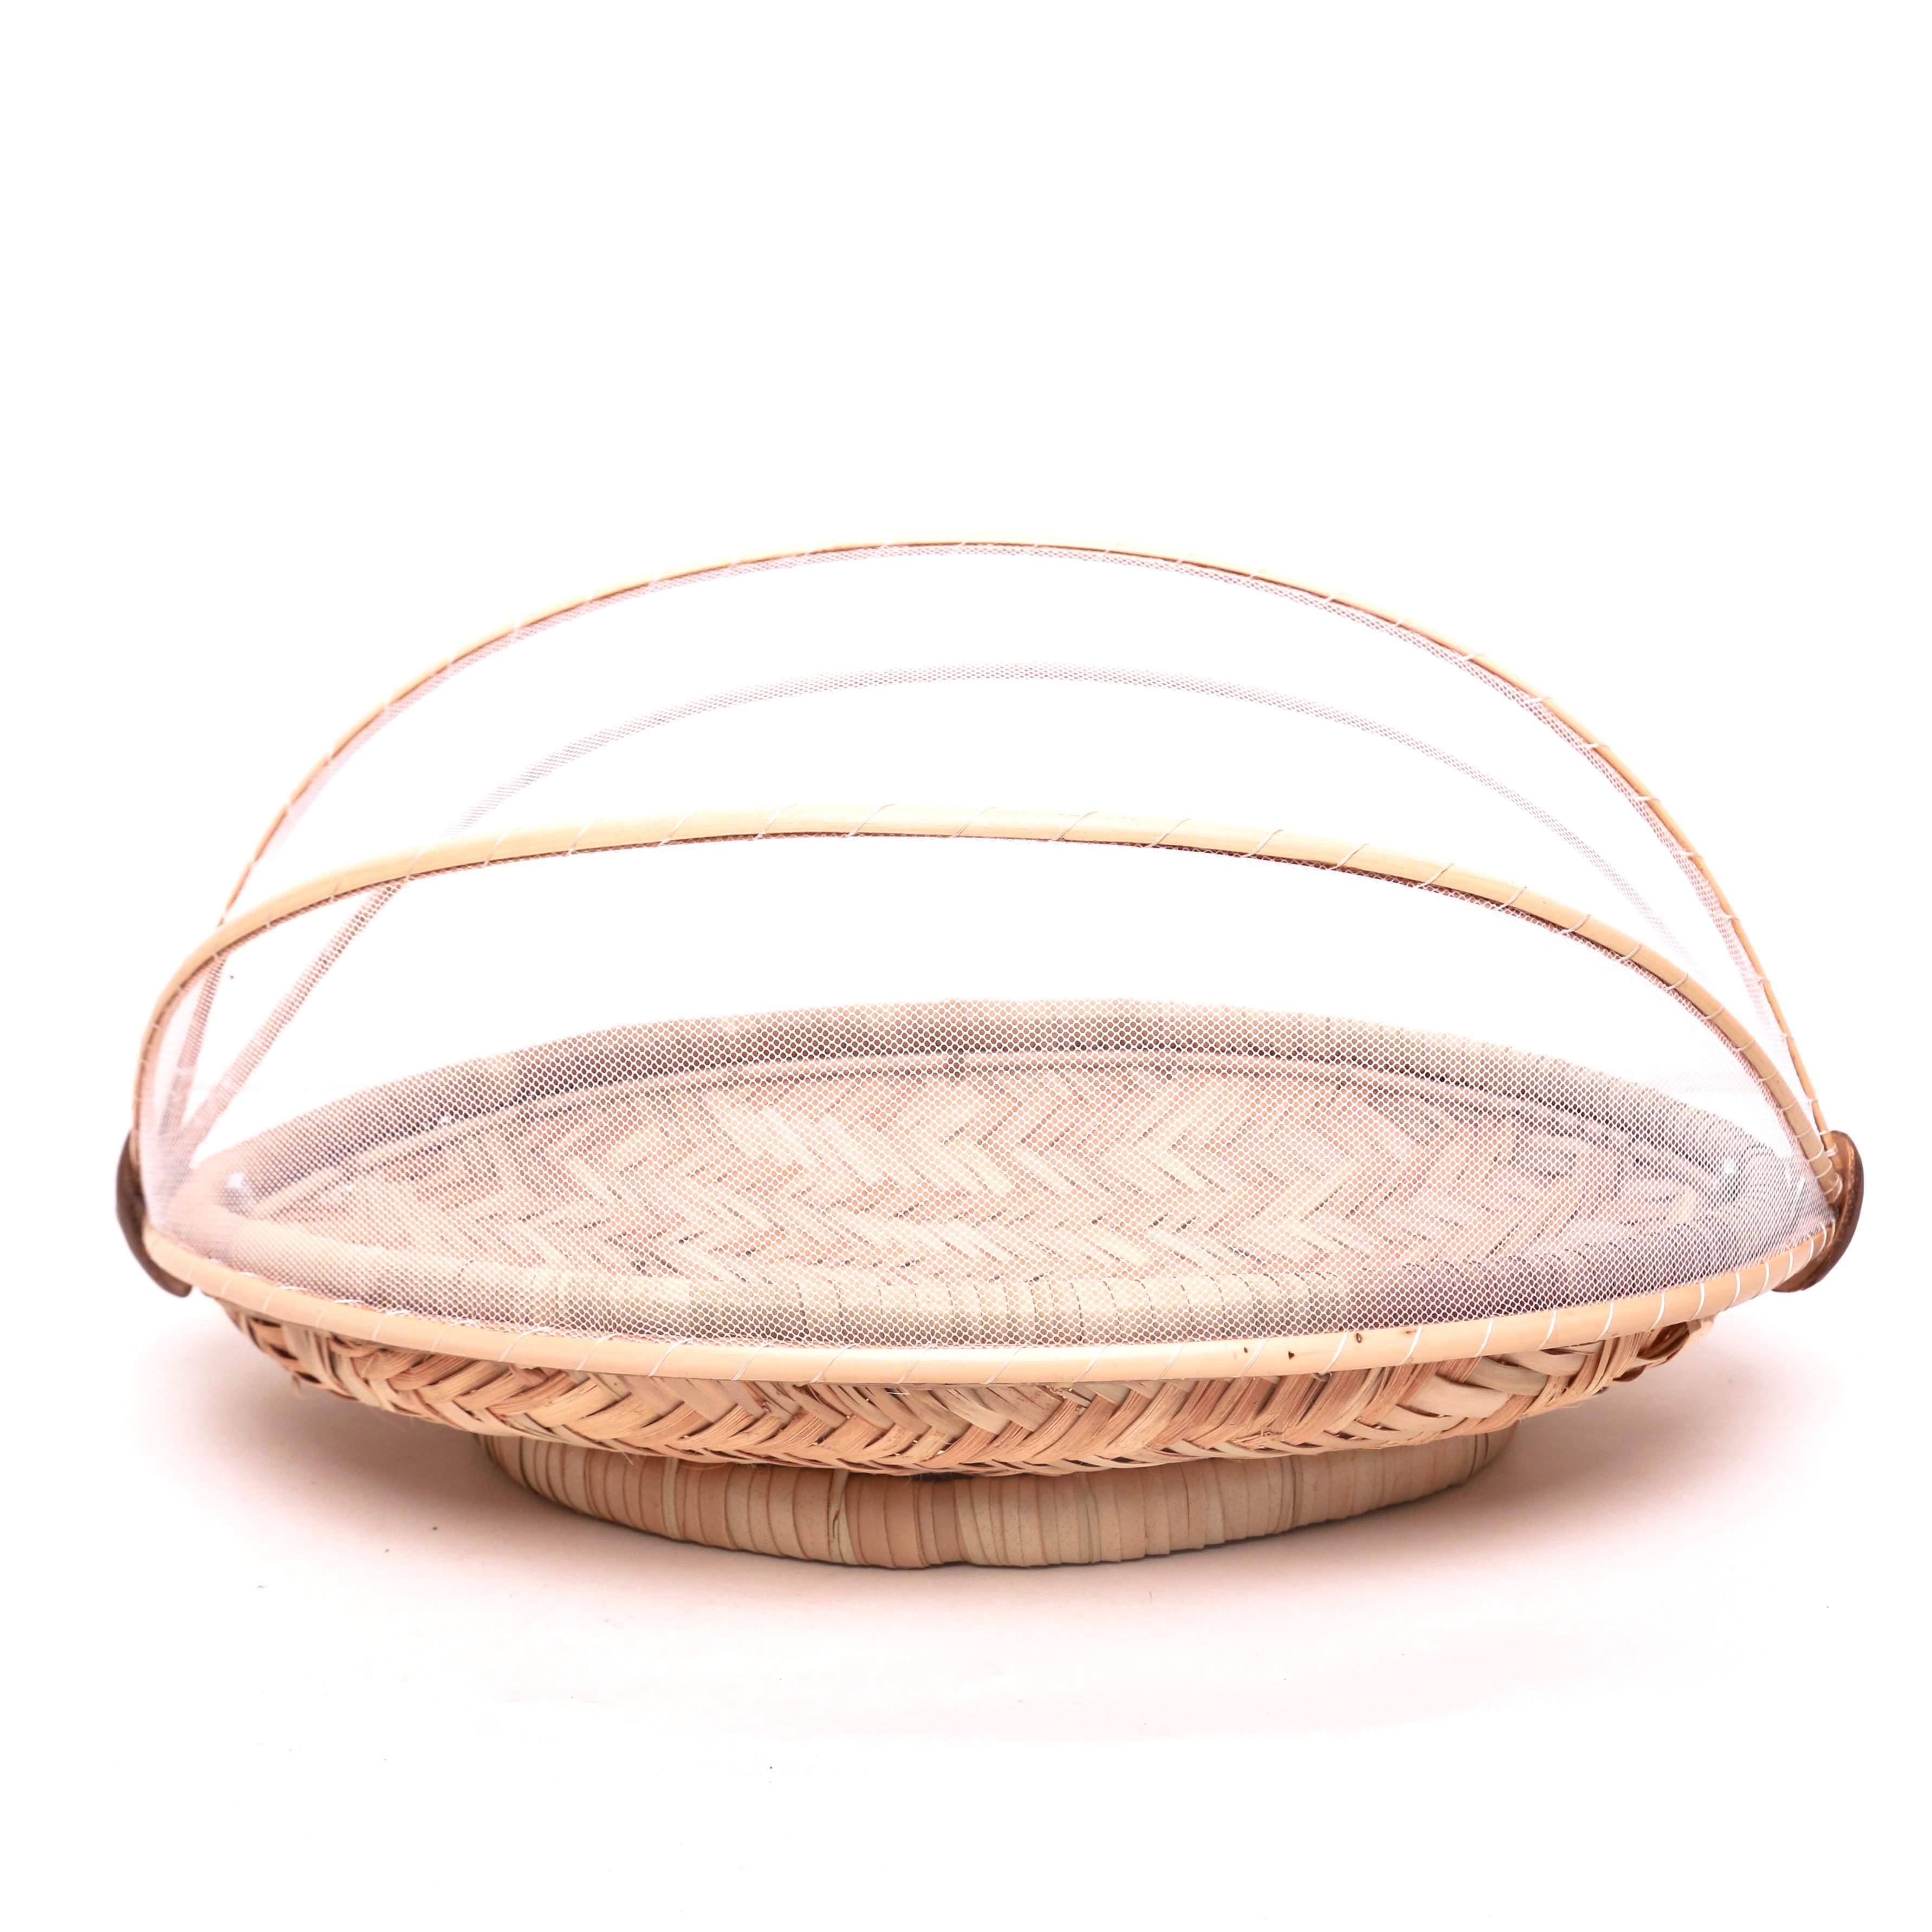 Mosquito net basket-Artisan Traders-african,food,handcrafted,handmade